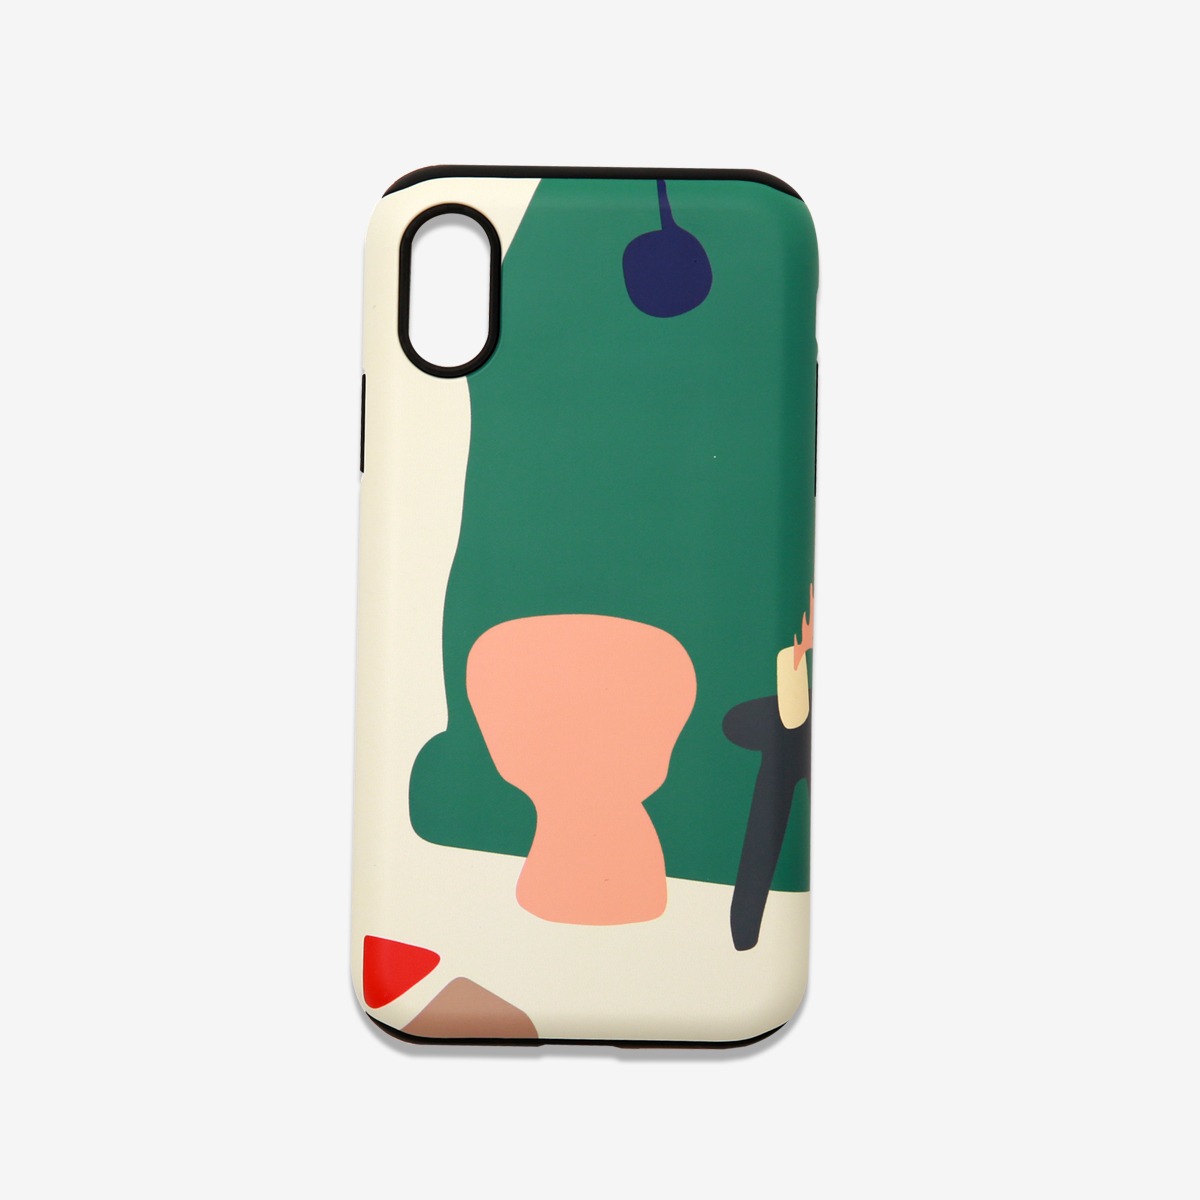 Greenery phone case